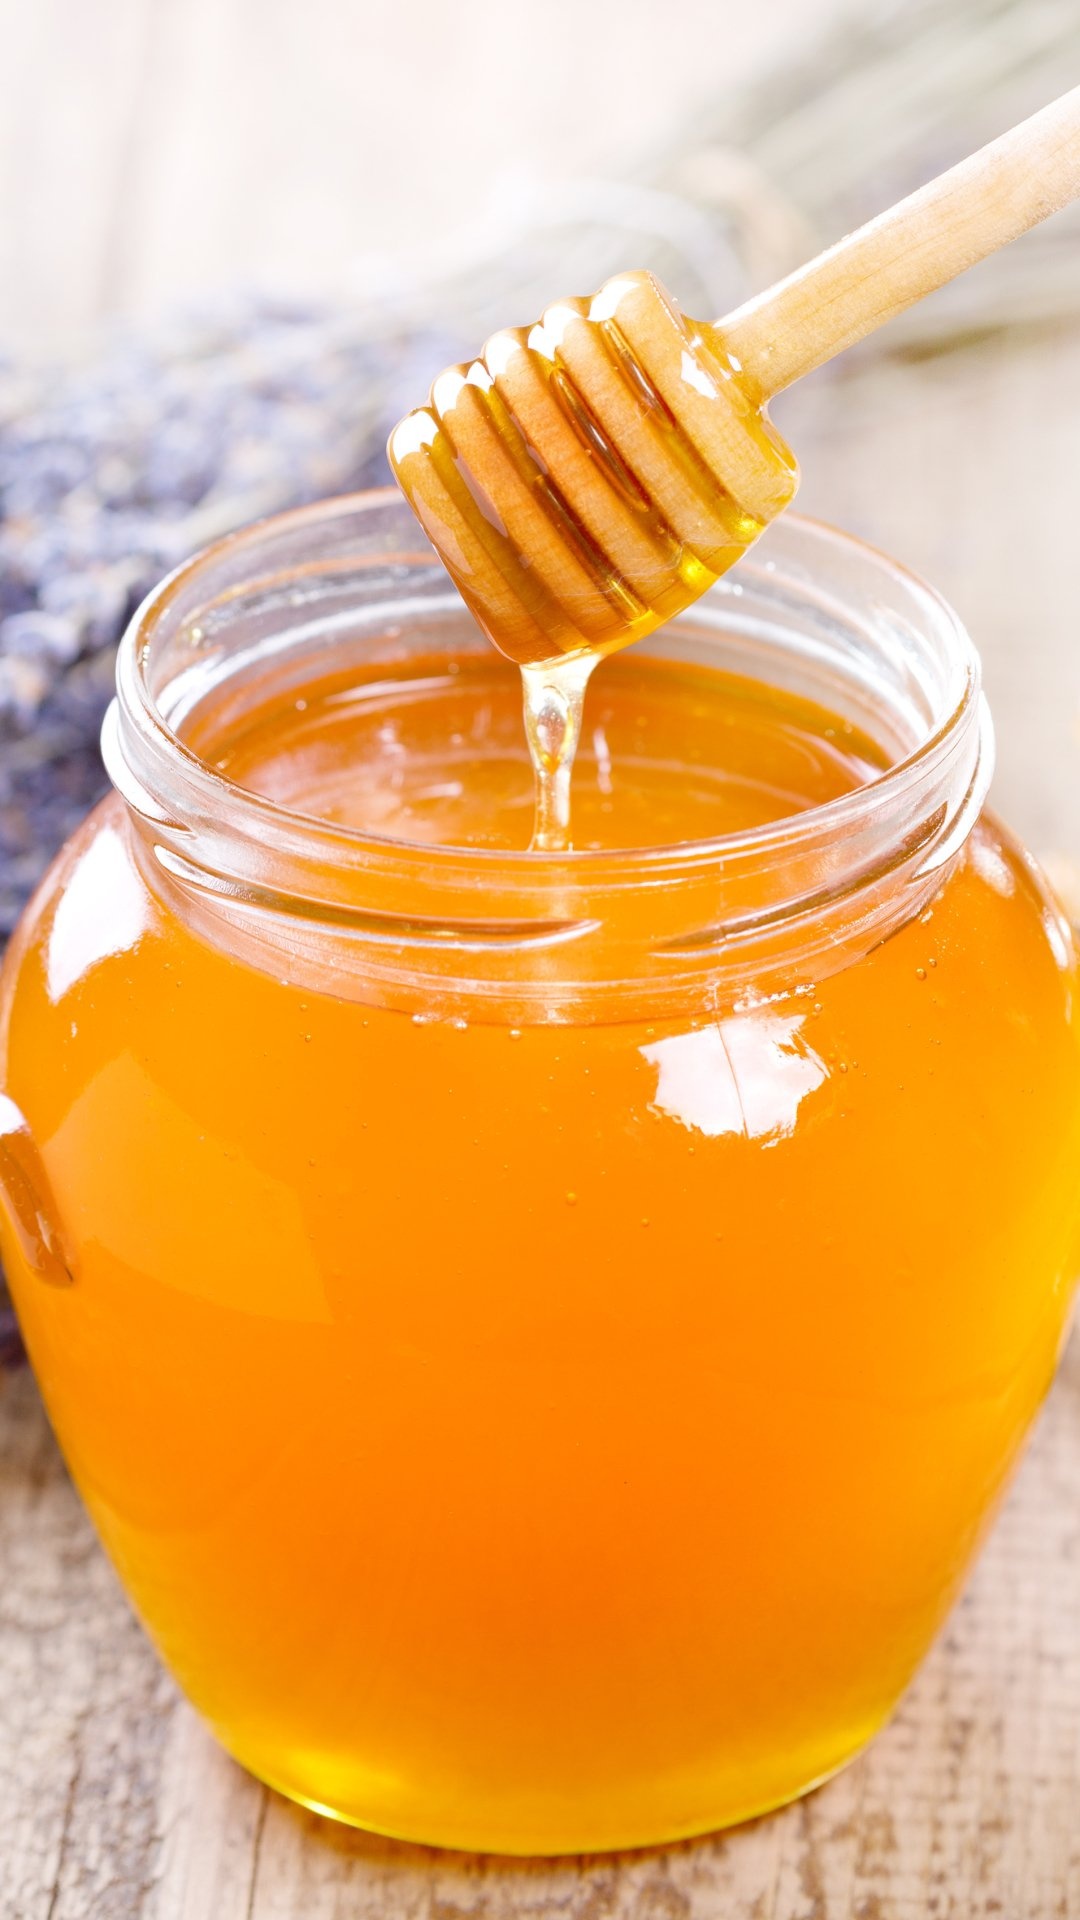 Honey: Viscous and fragrant, A natural sweetener. 1080x1920 Full HD Wallpaper.